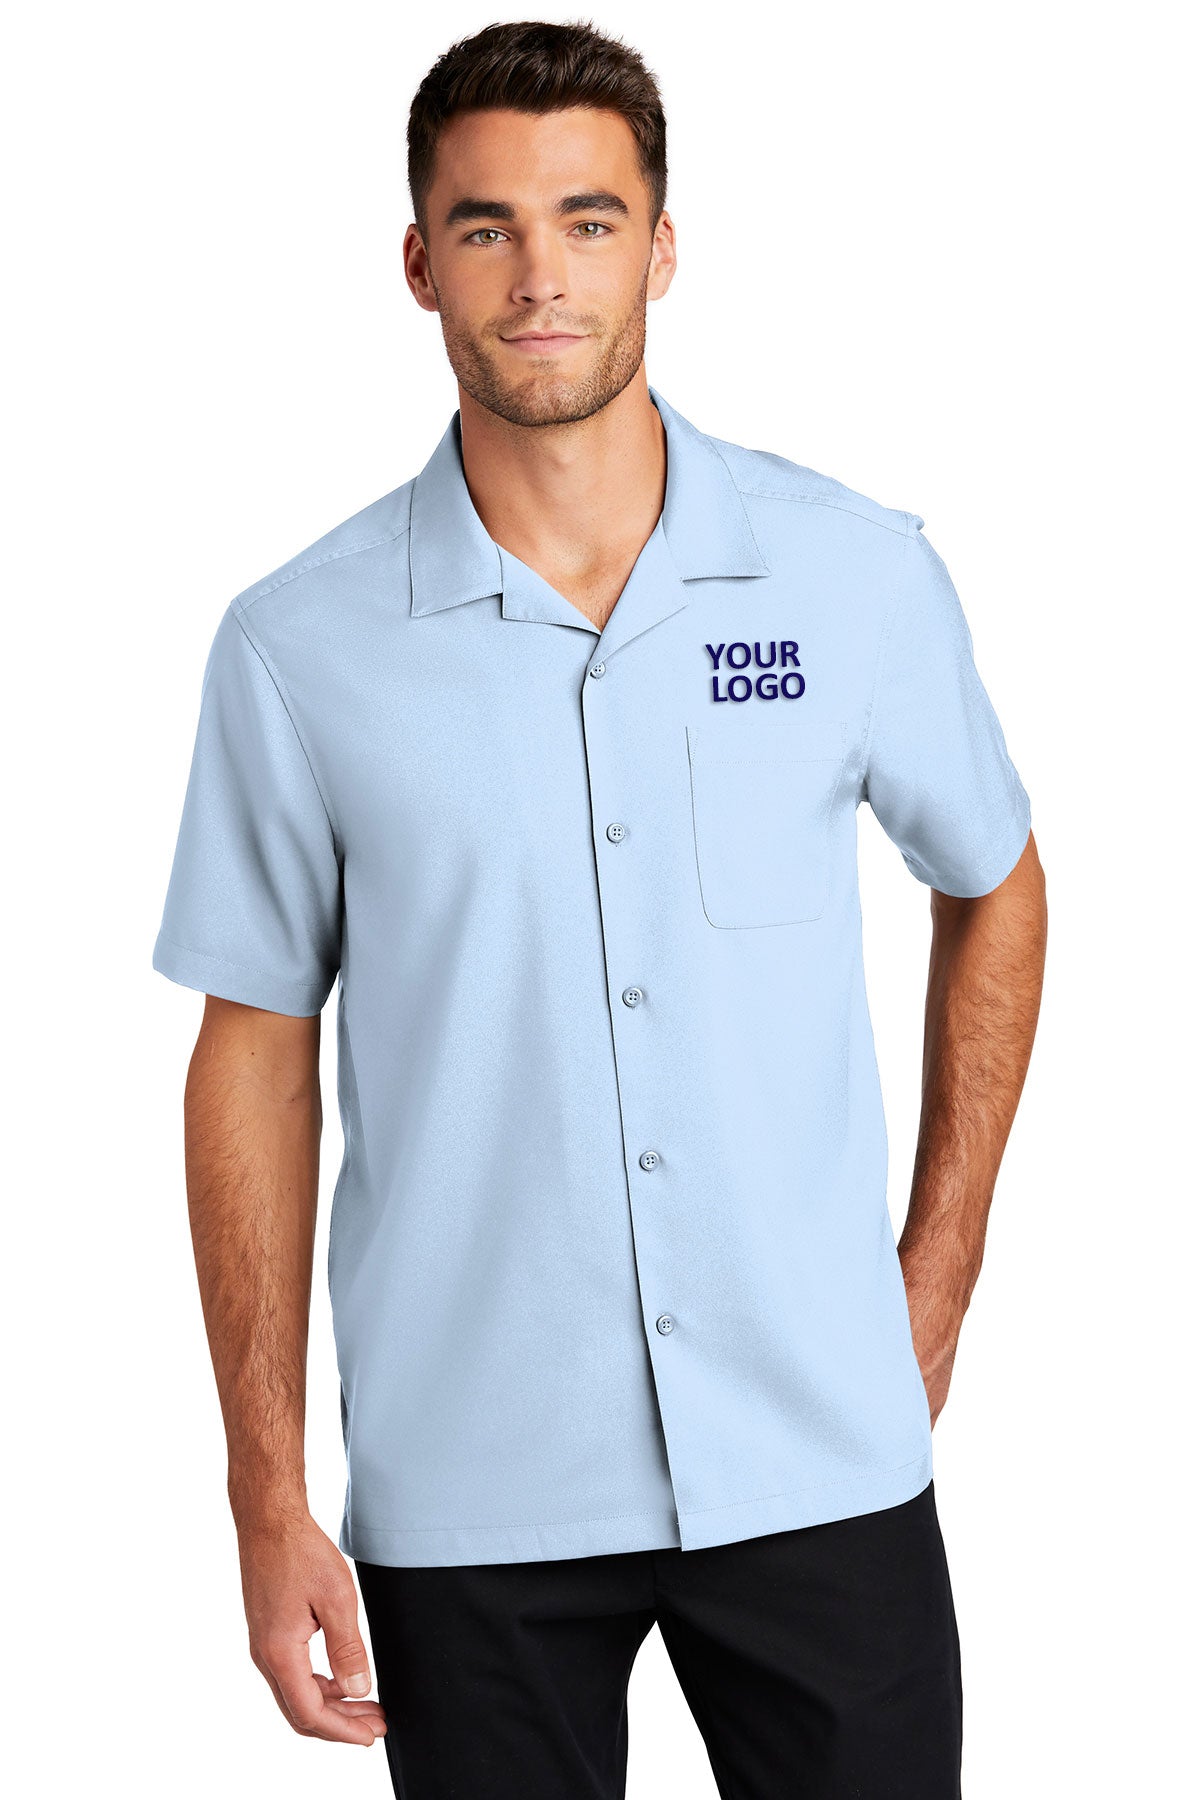 Port Authority Cloud Blue W400 logo shirts